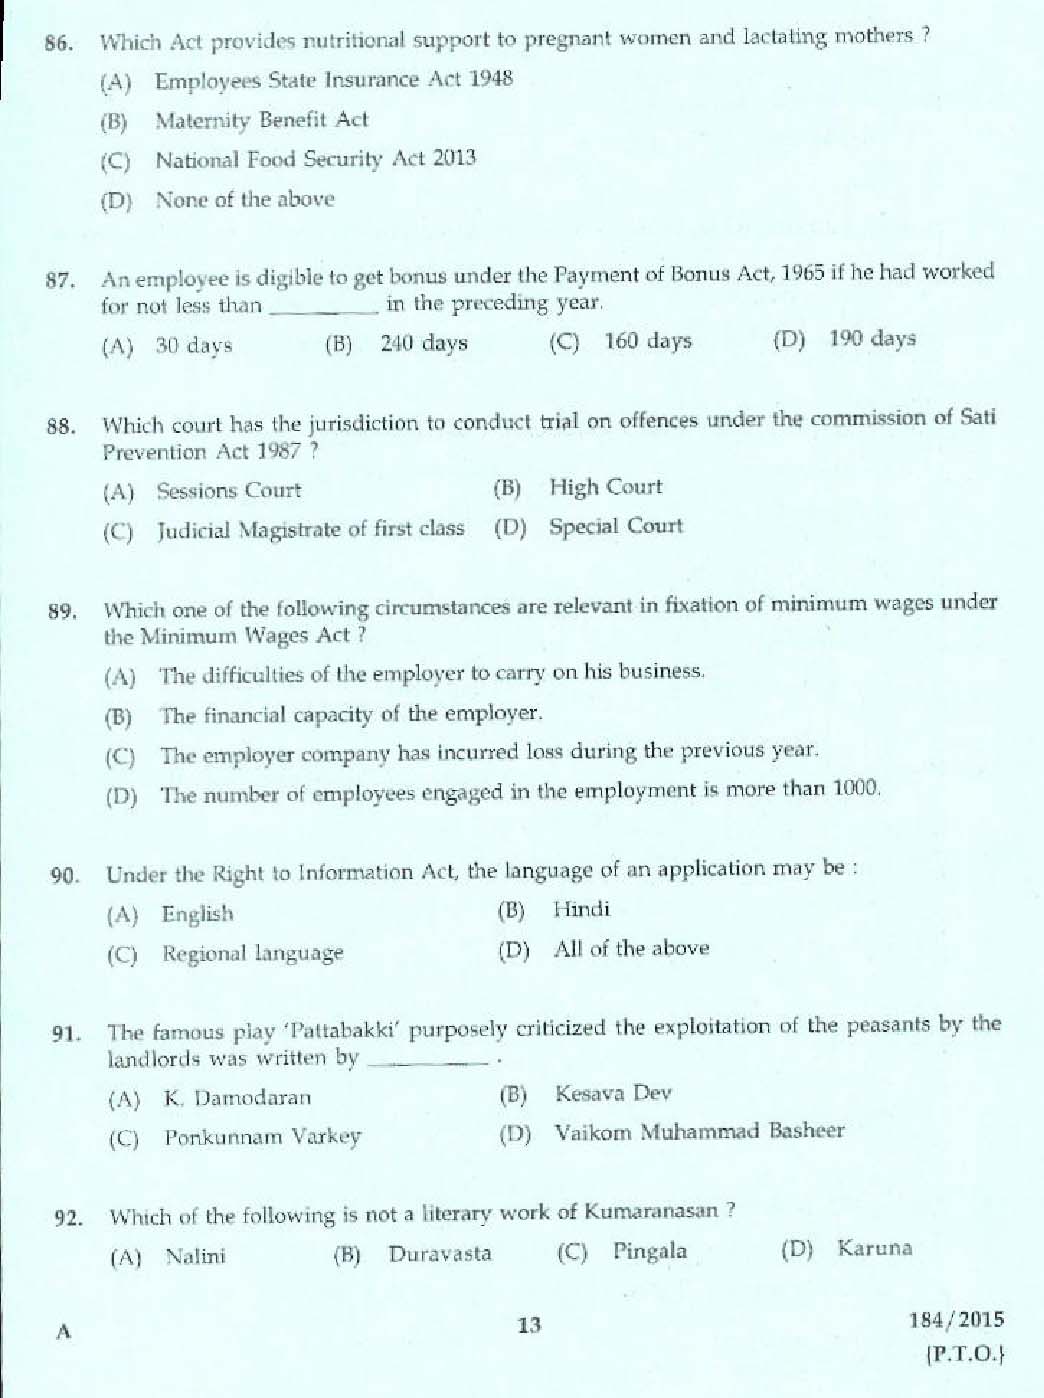 KPSC Lecturer in Hindi Exam 2015 Code 1842015 9